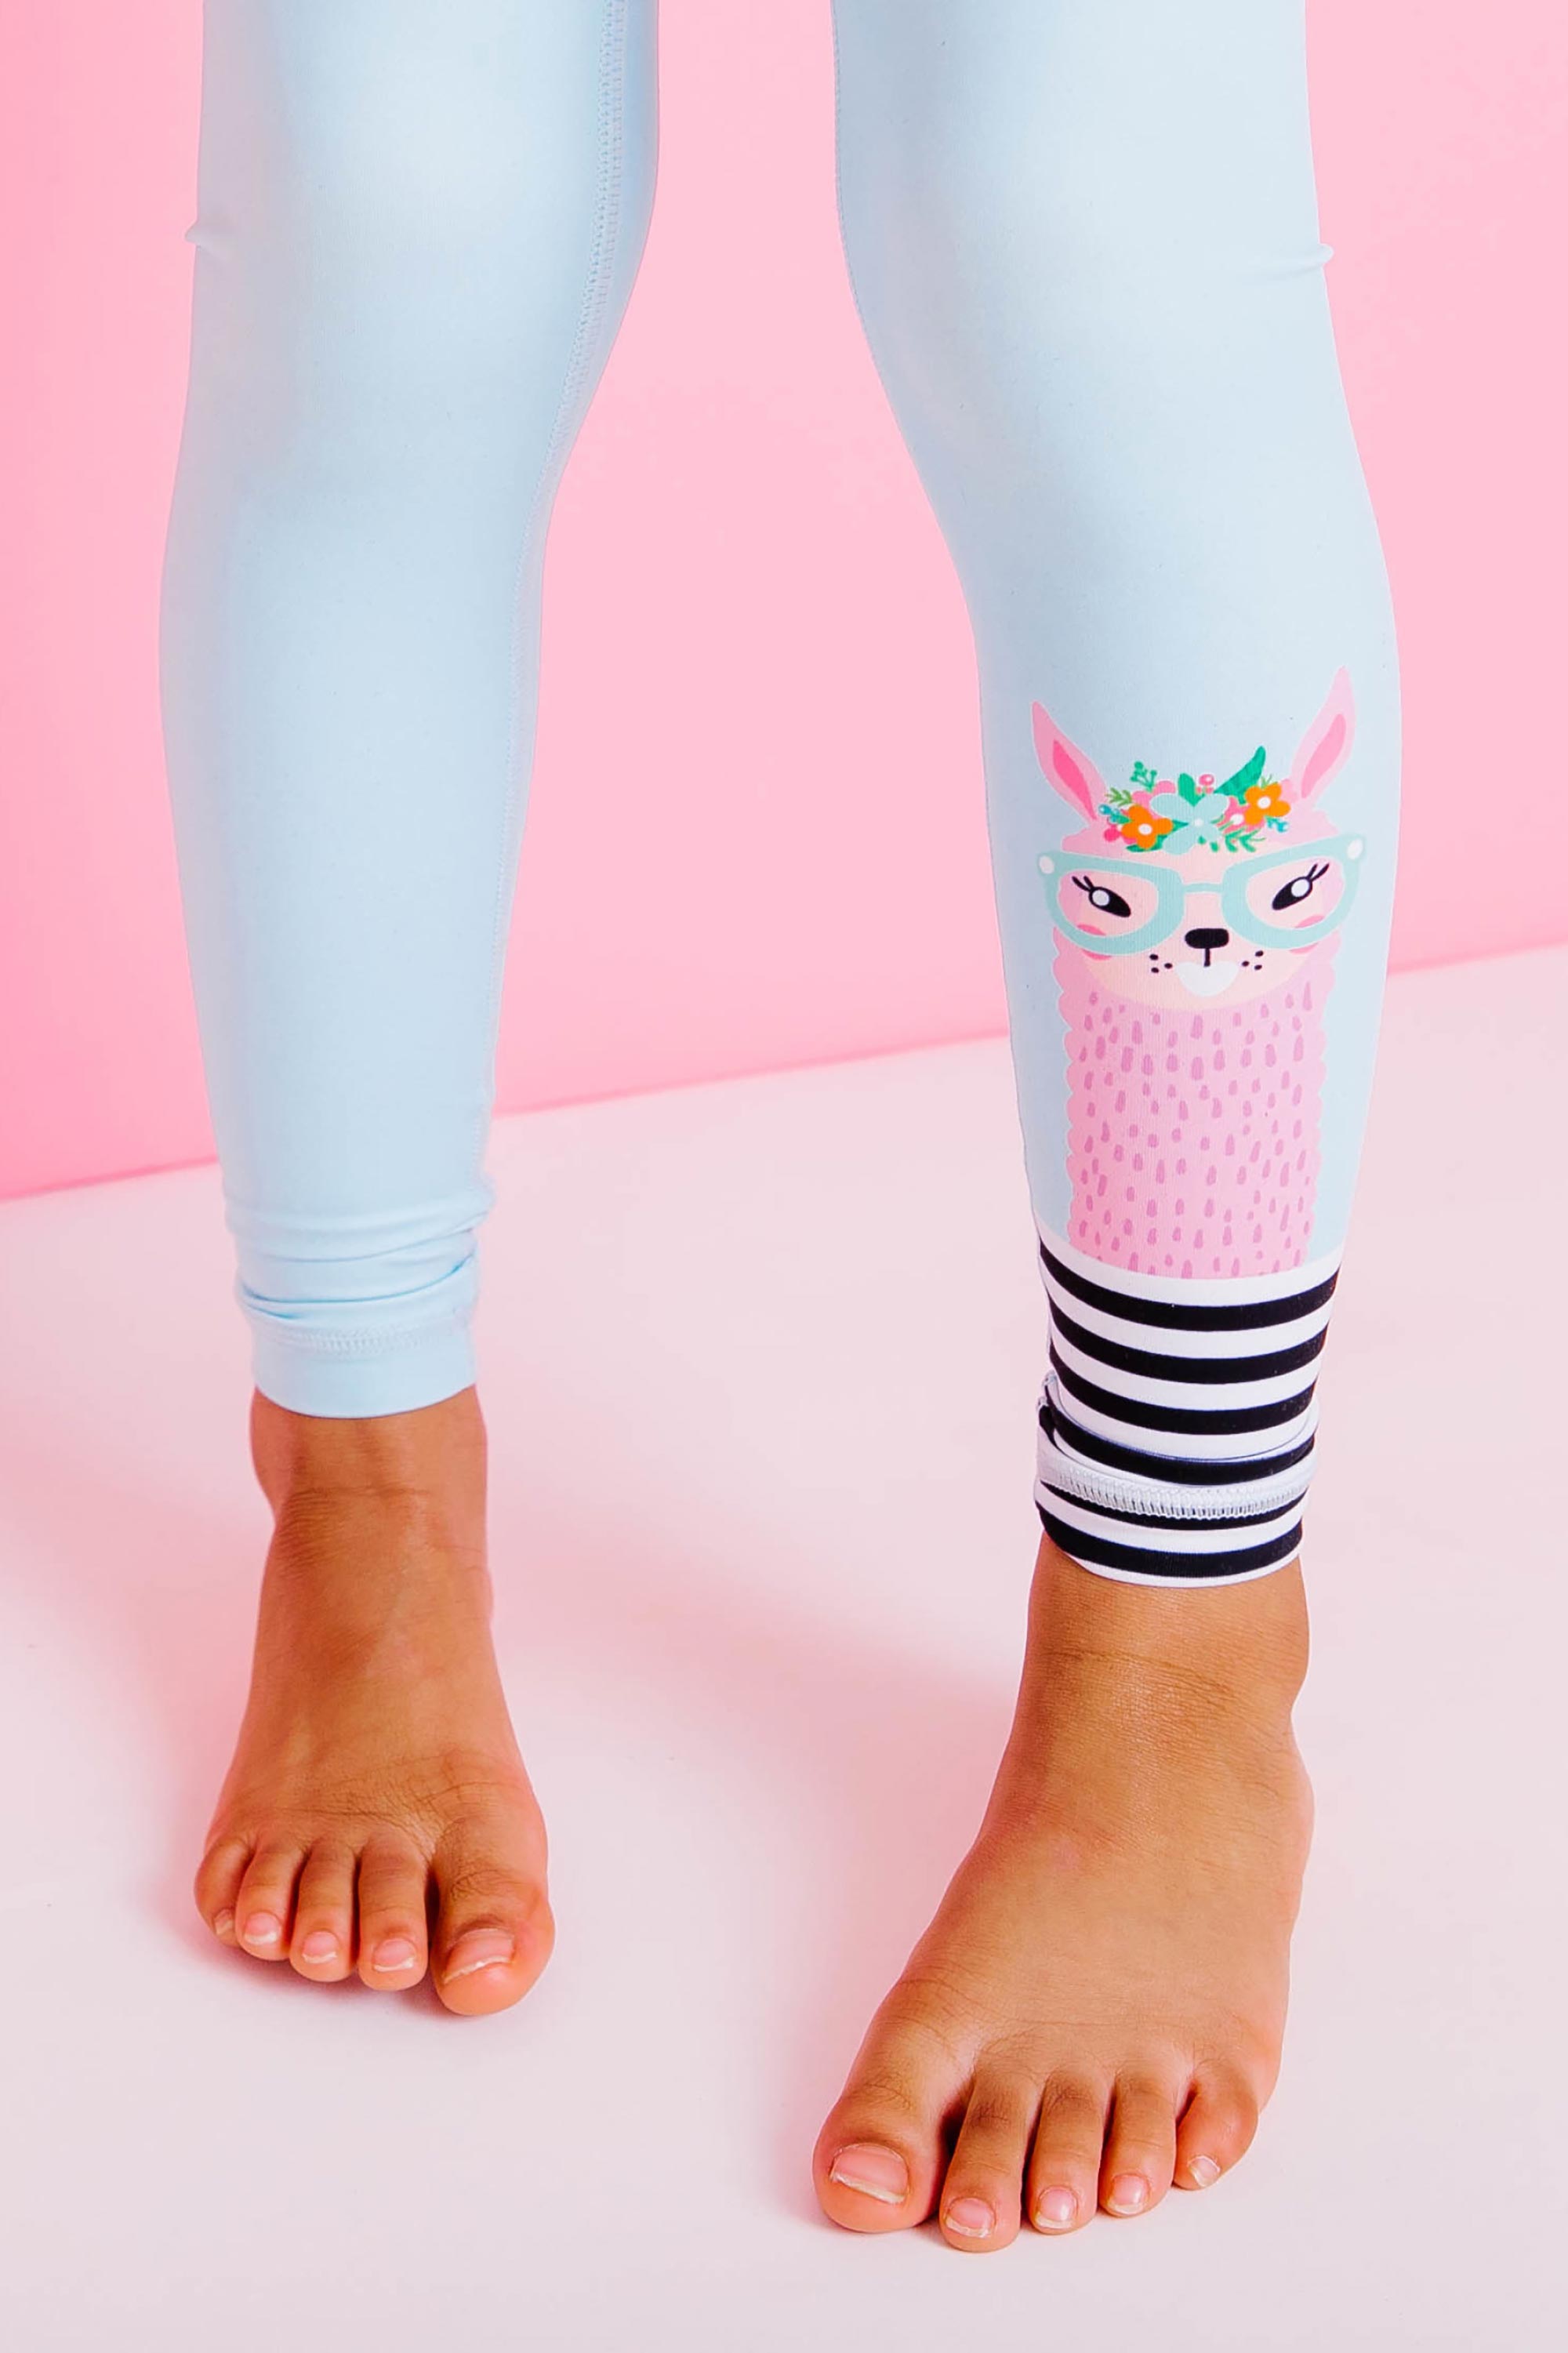 Best Deal for InterestPrint Cute Fluffy Unicorn Llama Soft Yoga Pants